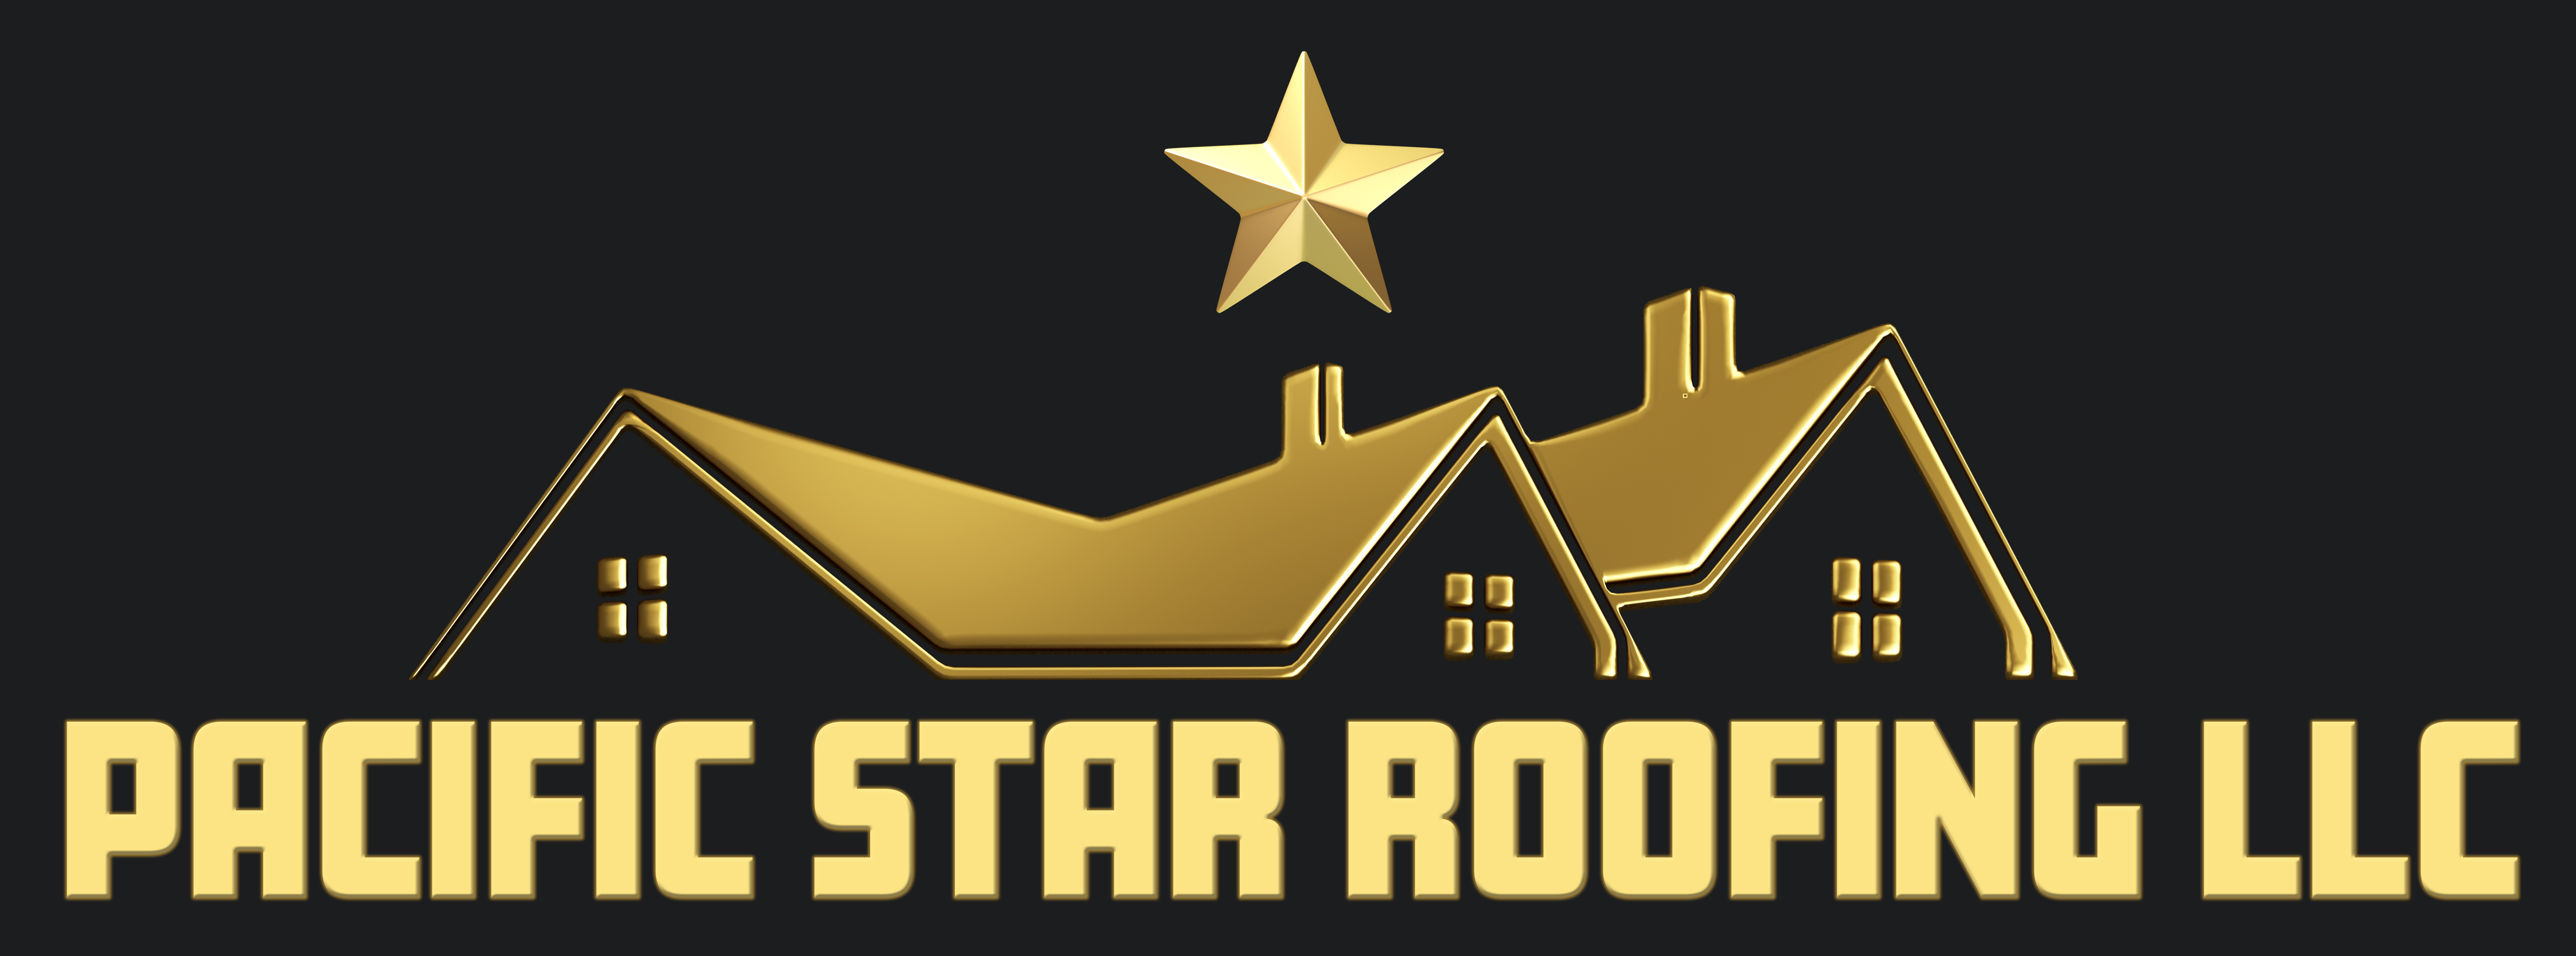 Pacific Star Roofing LLC Logo